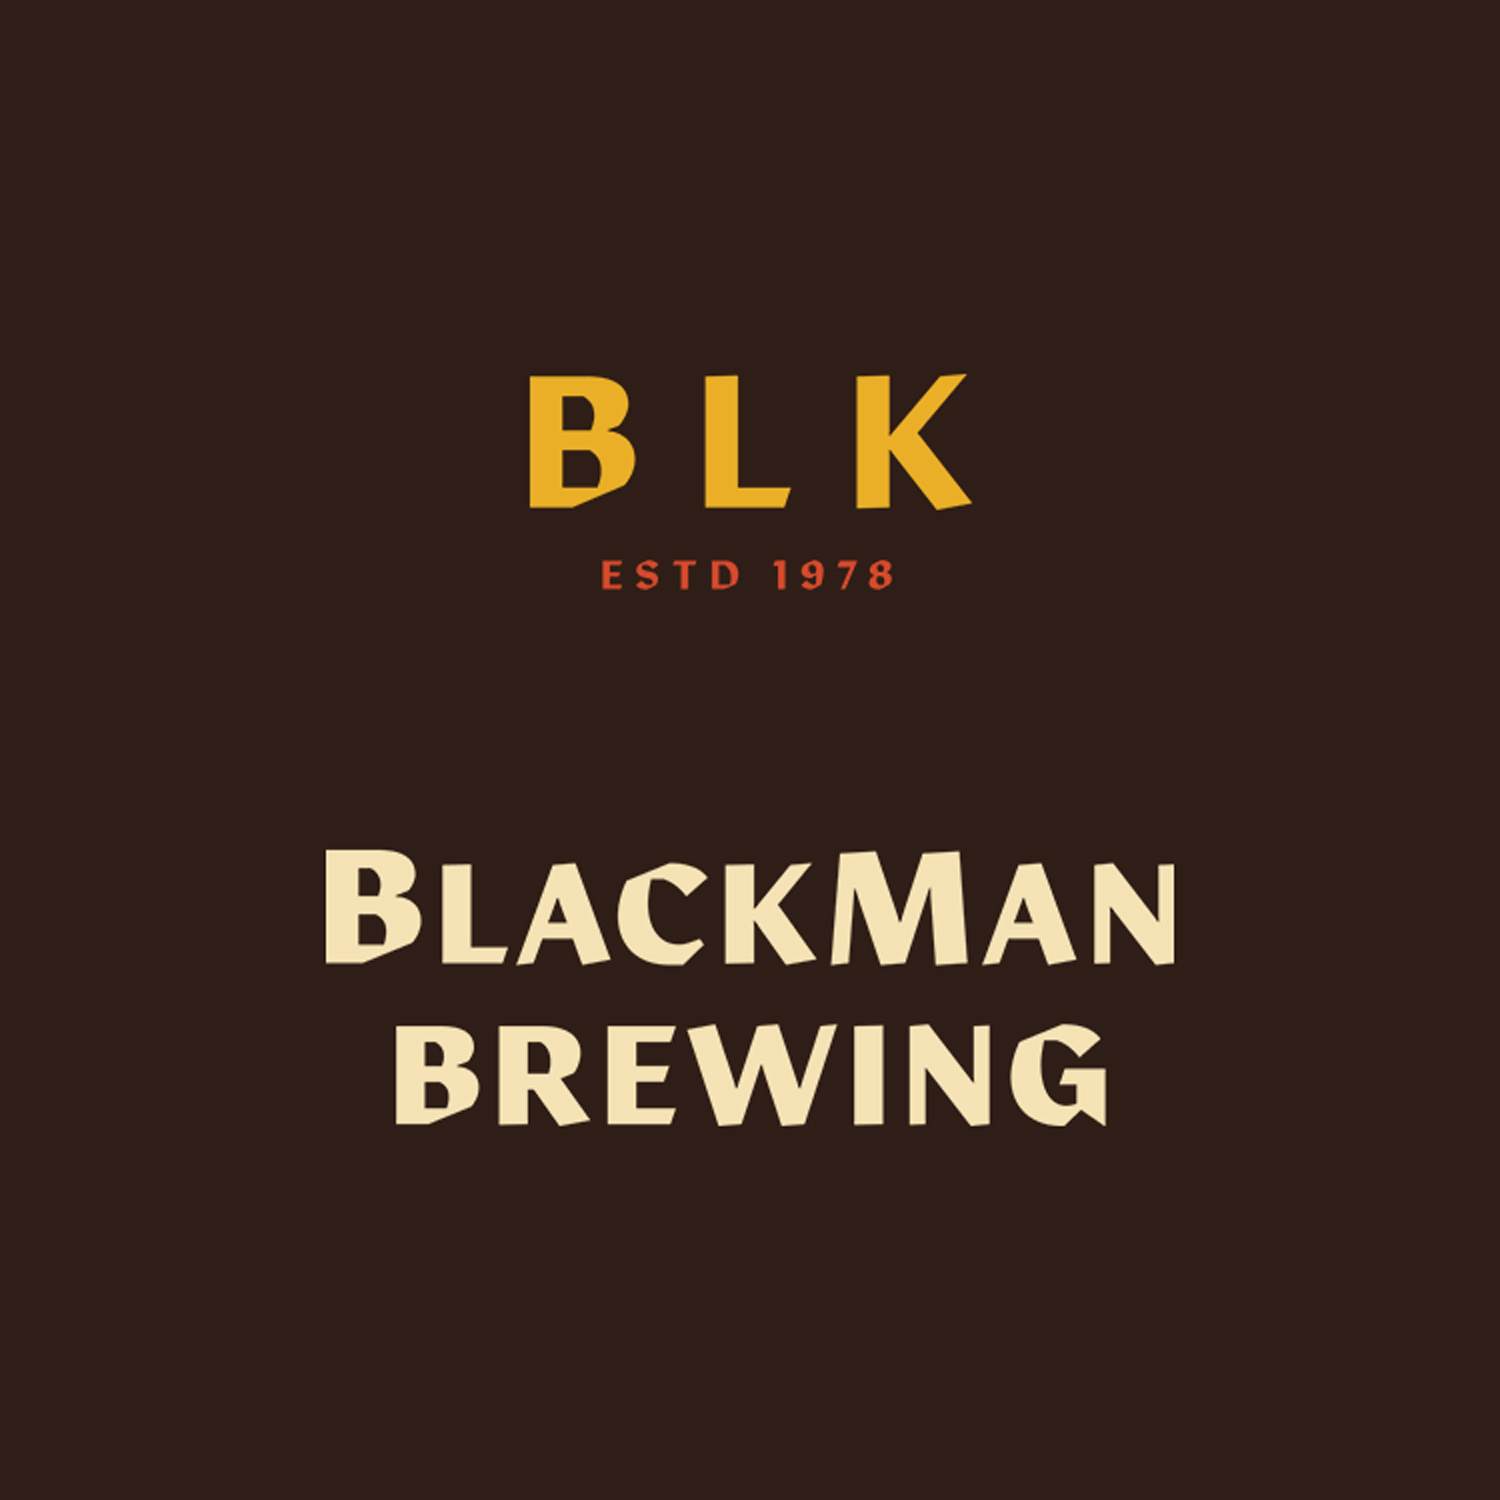 BlackMan-Brewing-Logos